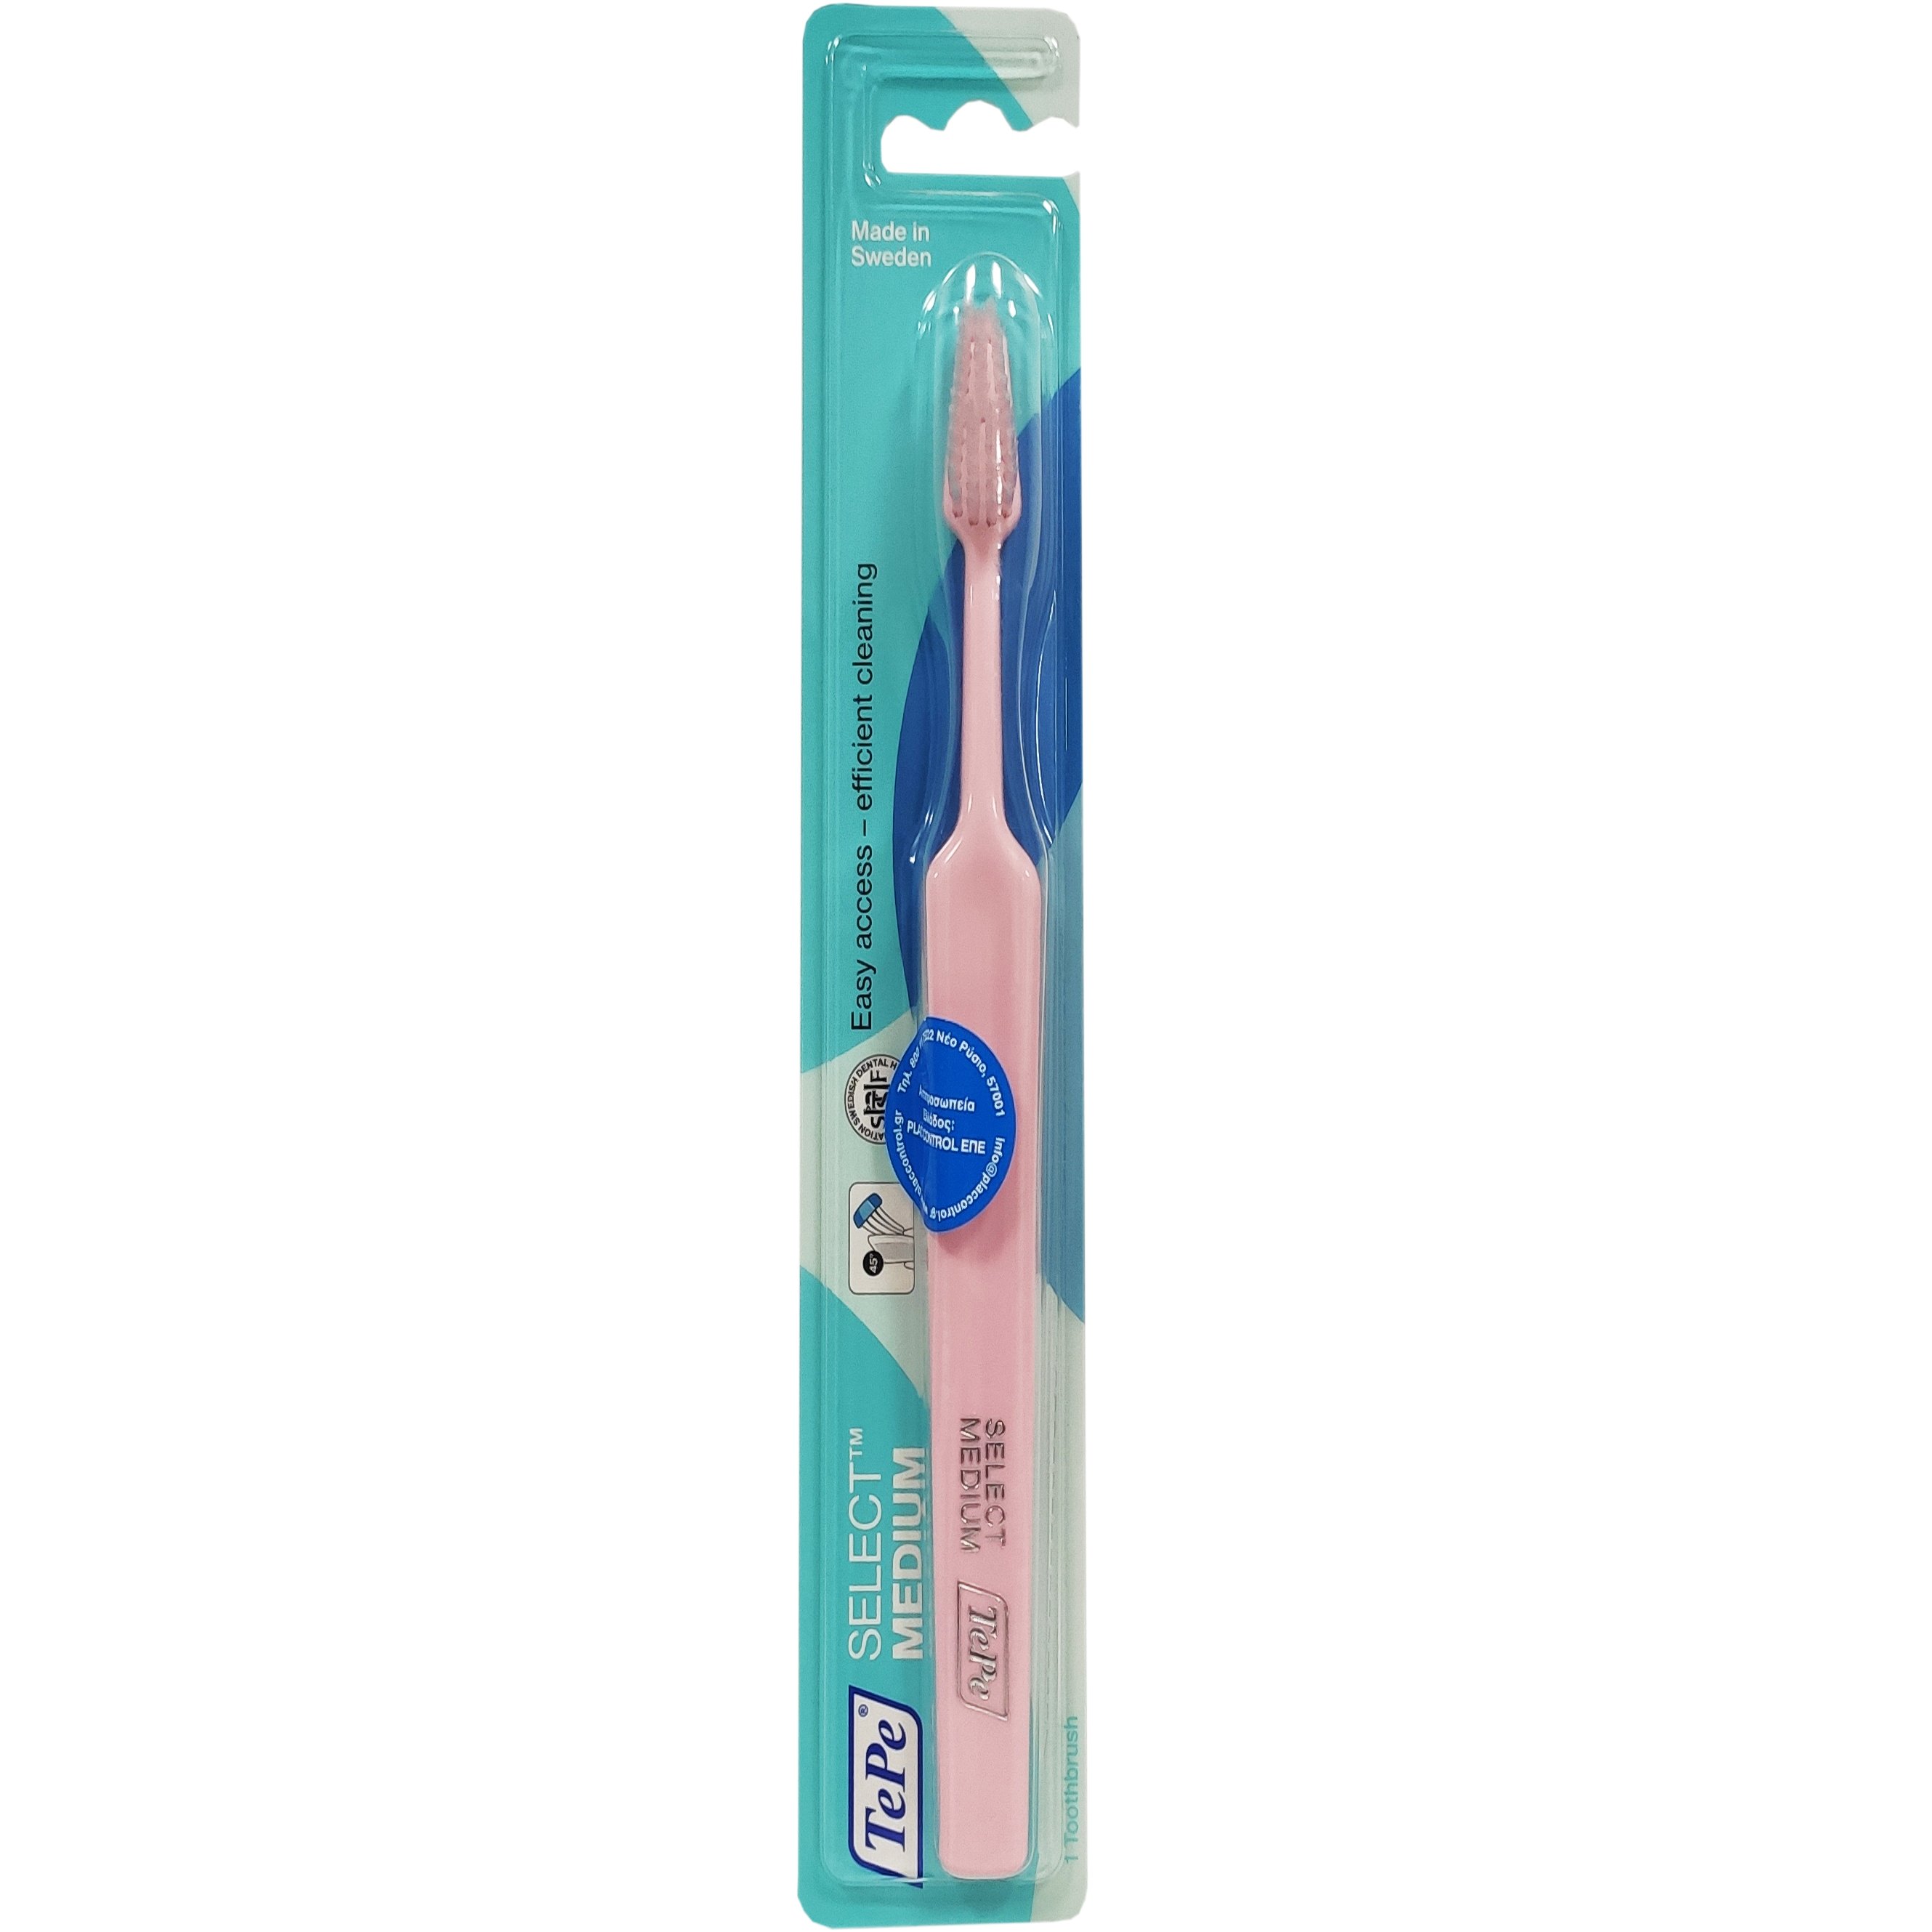 Tepe Select Medium Οδοντόβουρτσα Μέτρια για Εύκολη Πρόσβαση στα Πίσω Δόντια & Αποτελεσματικό Καθαρισμό 1 Τεμάχιο – ροζ